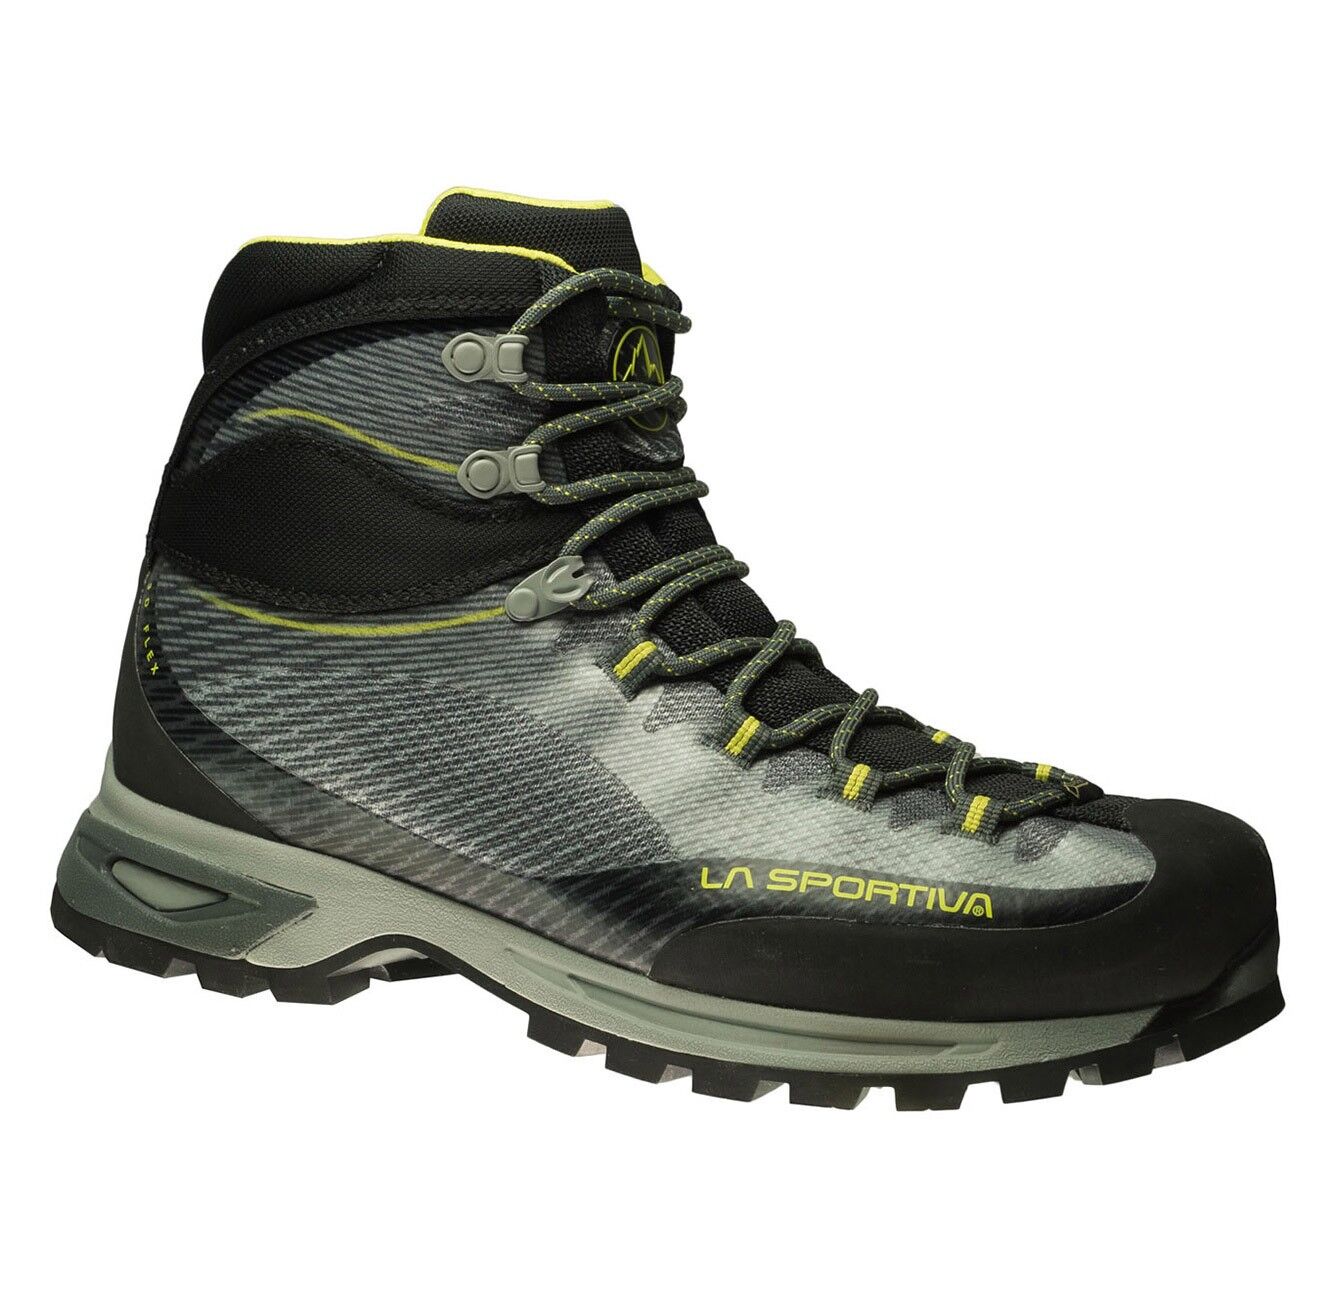 La Sportiva - Trango TRK GTX - Hiking Boots - Men's